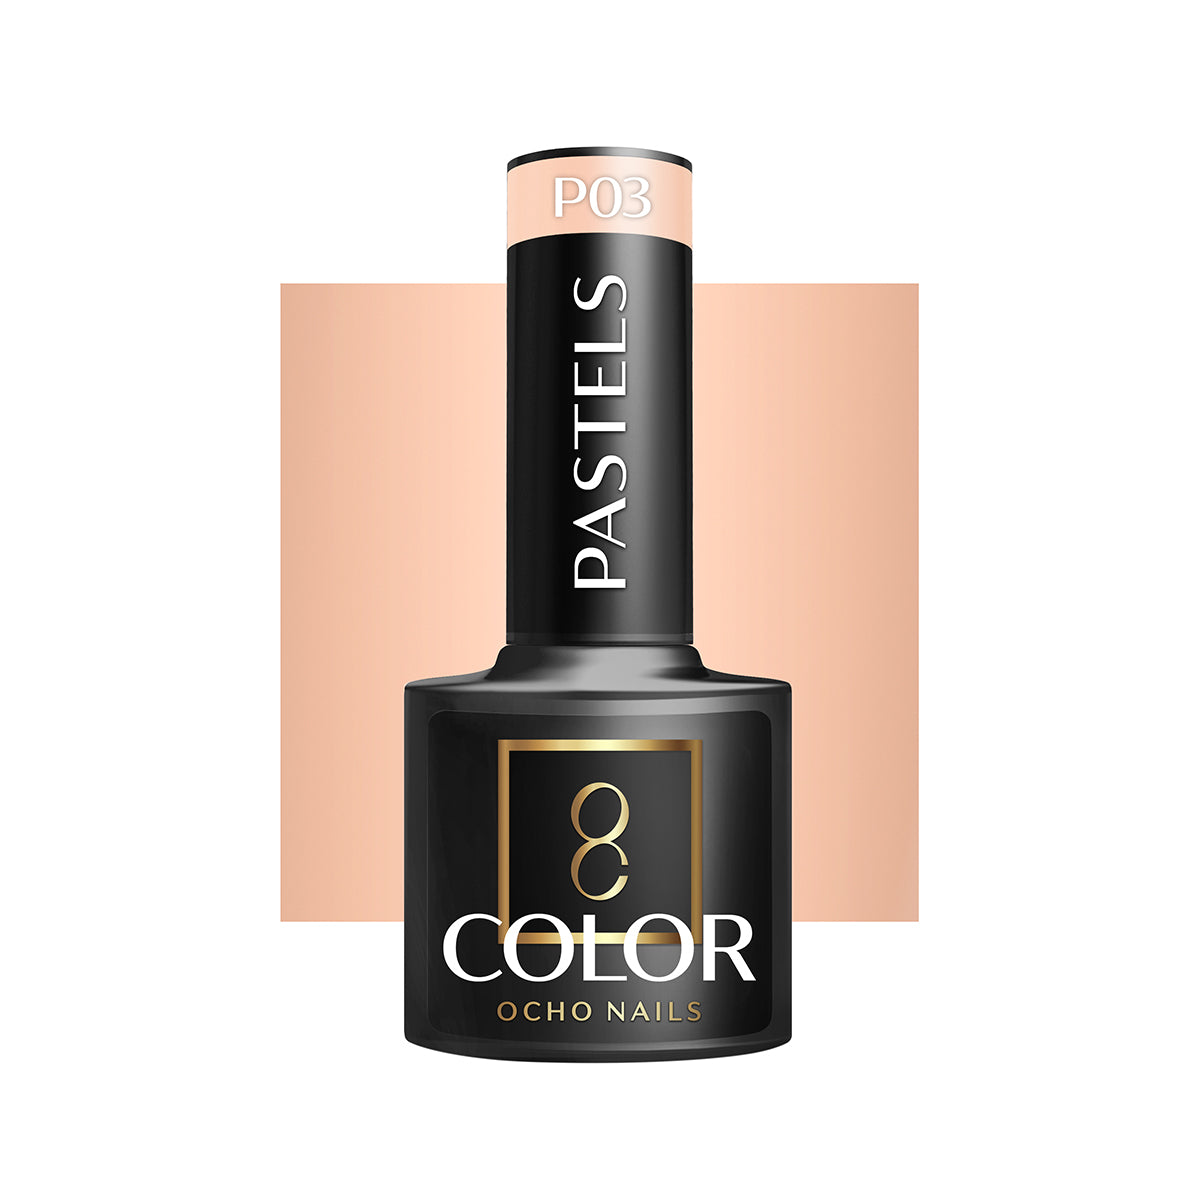 OCHO NAILS Hybride nagellak pastels P03 -5 g